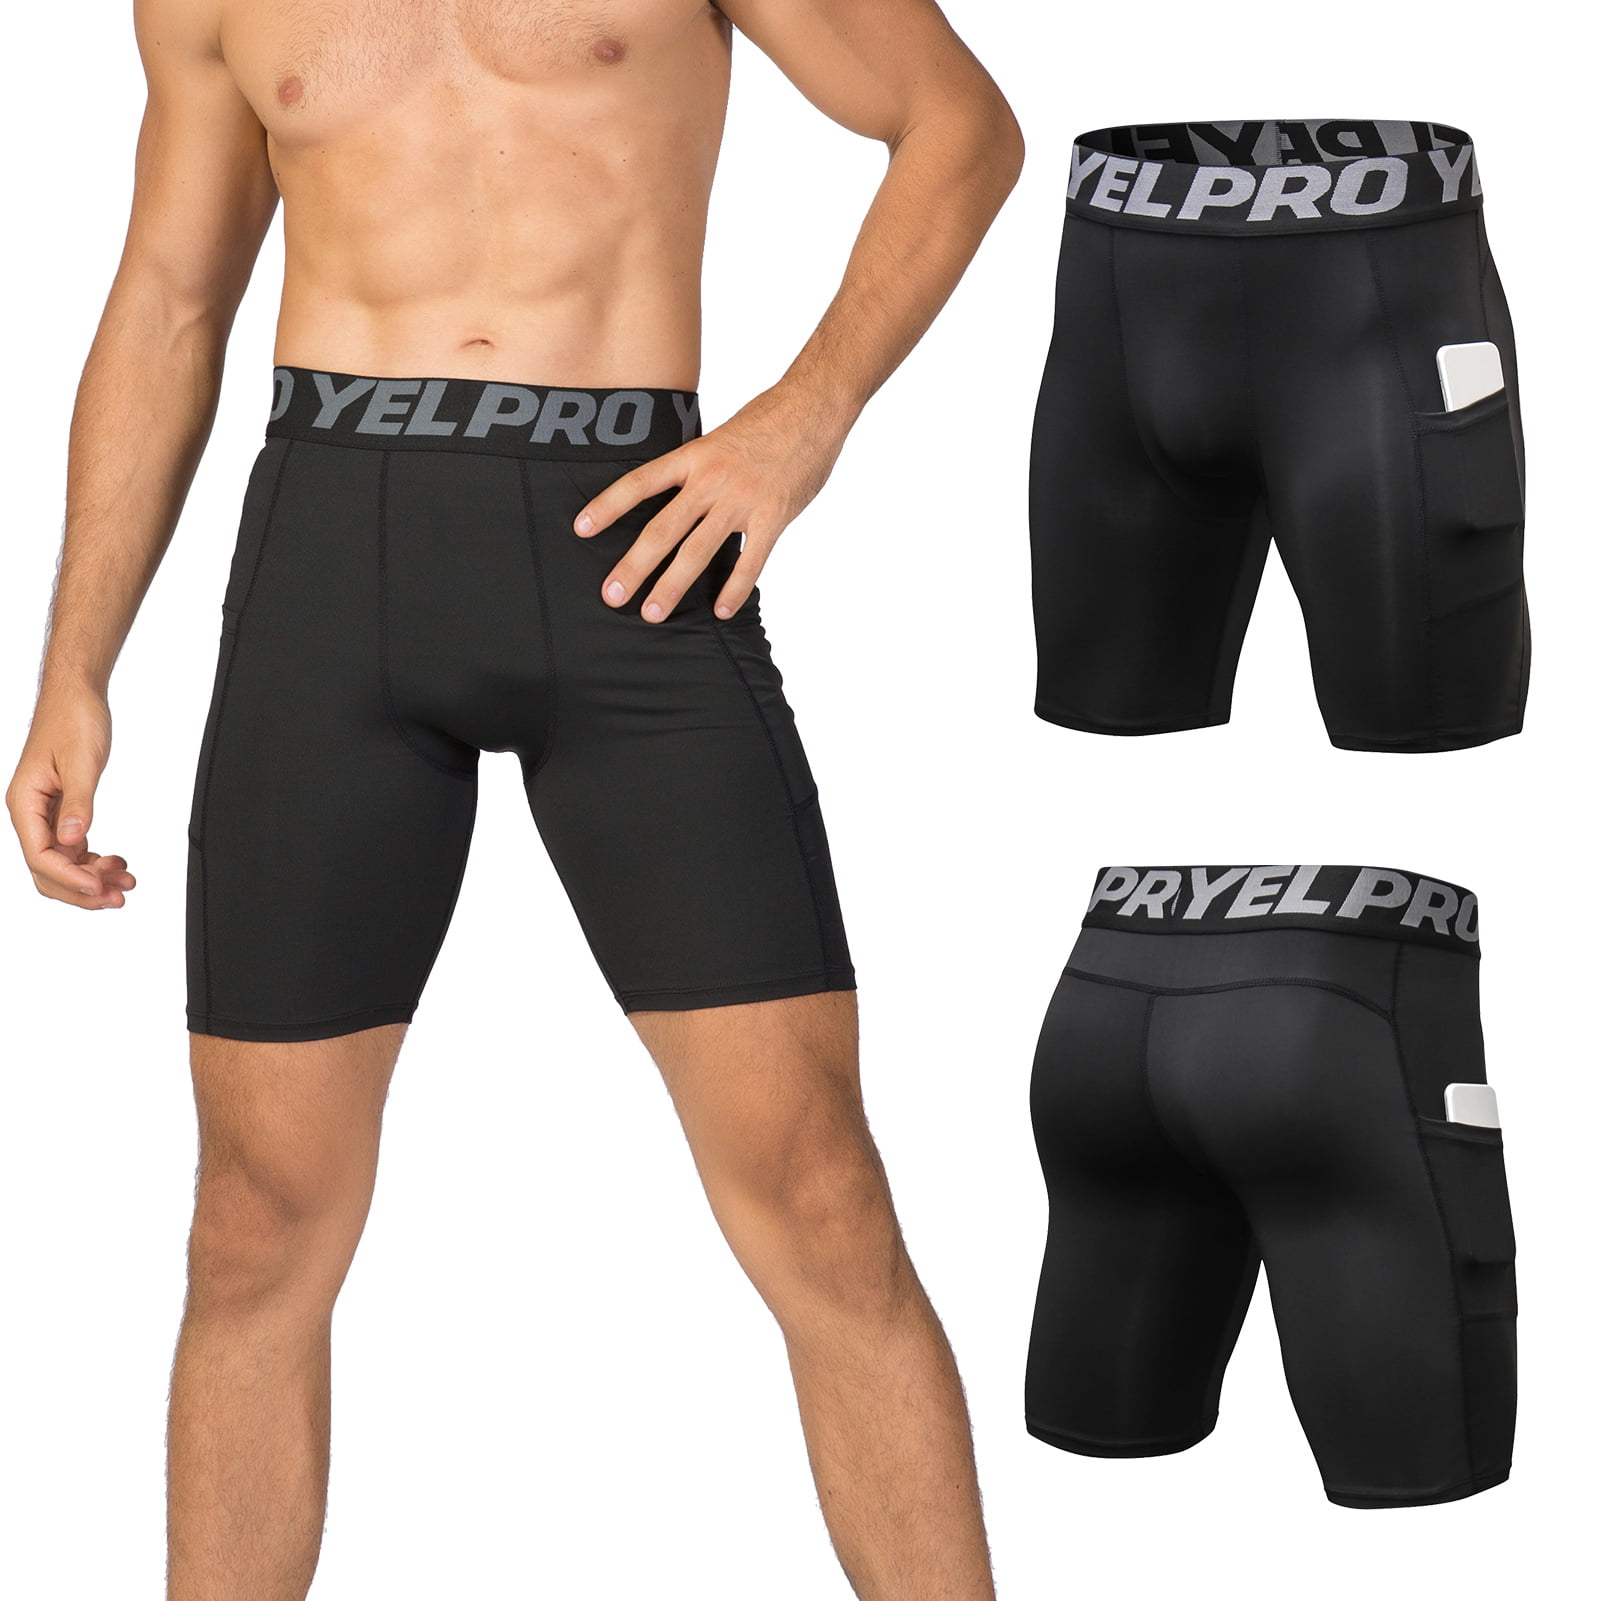 HVASITOP 3 Pack Men Compression Shorts Active Workout Underwear with Pocket 